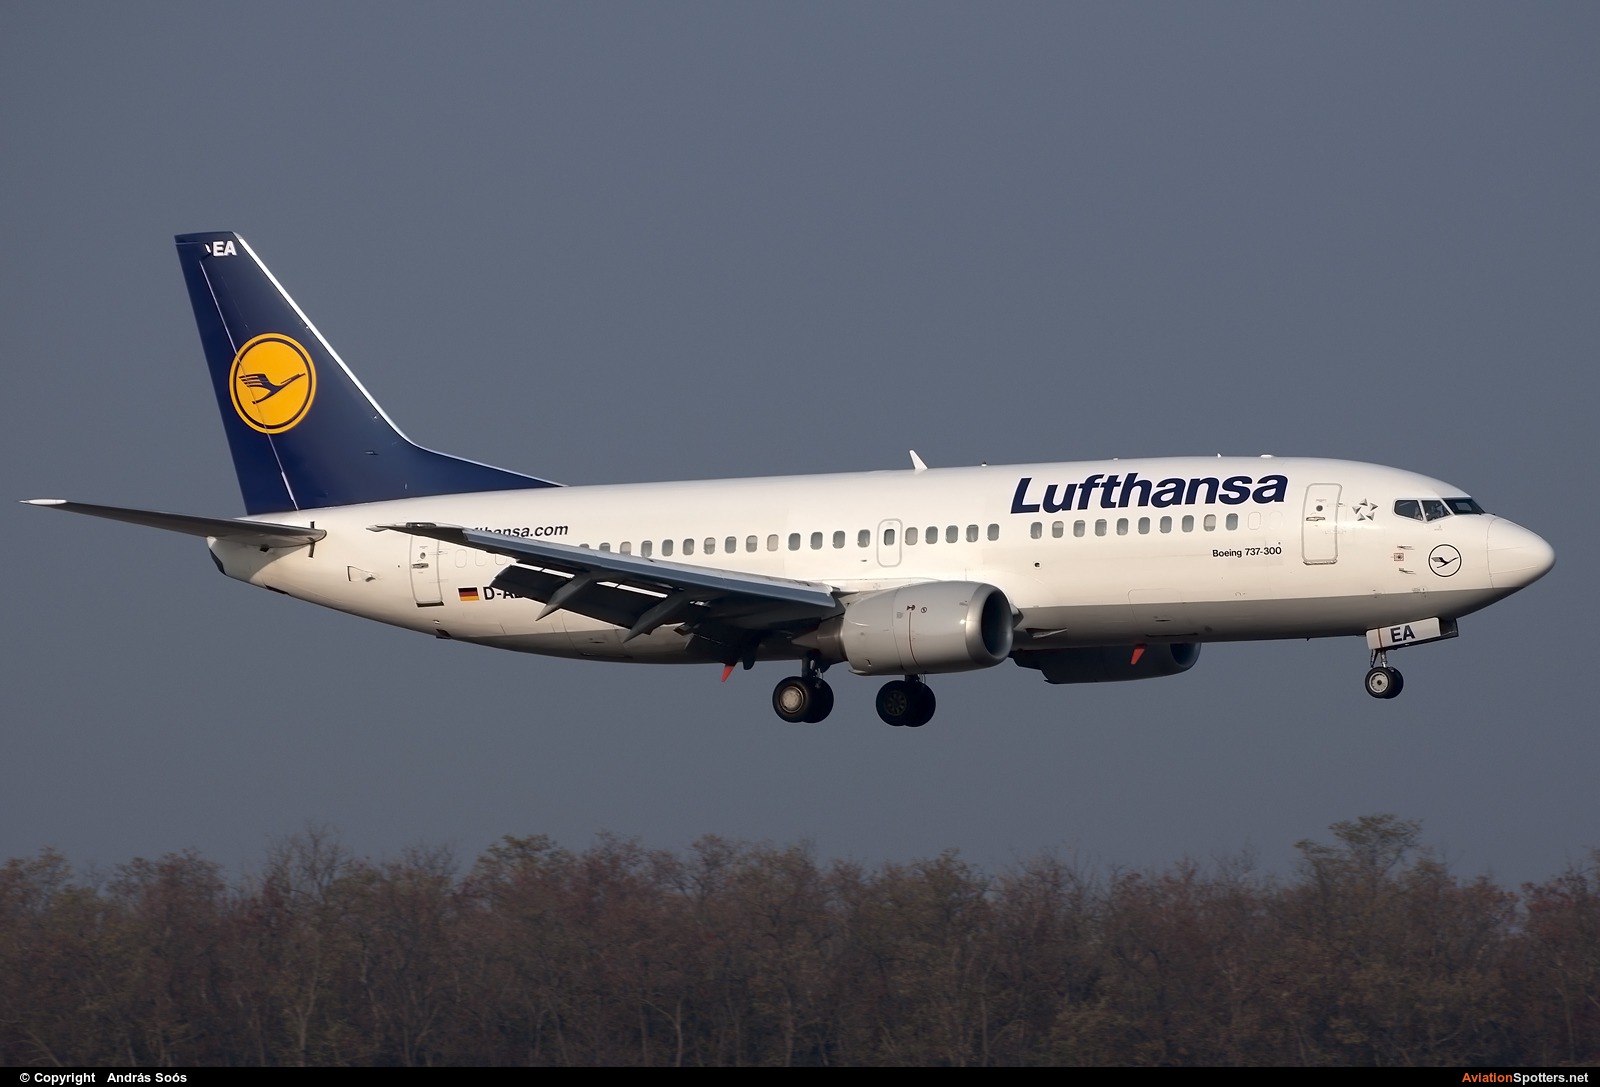 Lufthansa  -  737-300  (D-ABEA) By András Soós (sas1965)